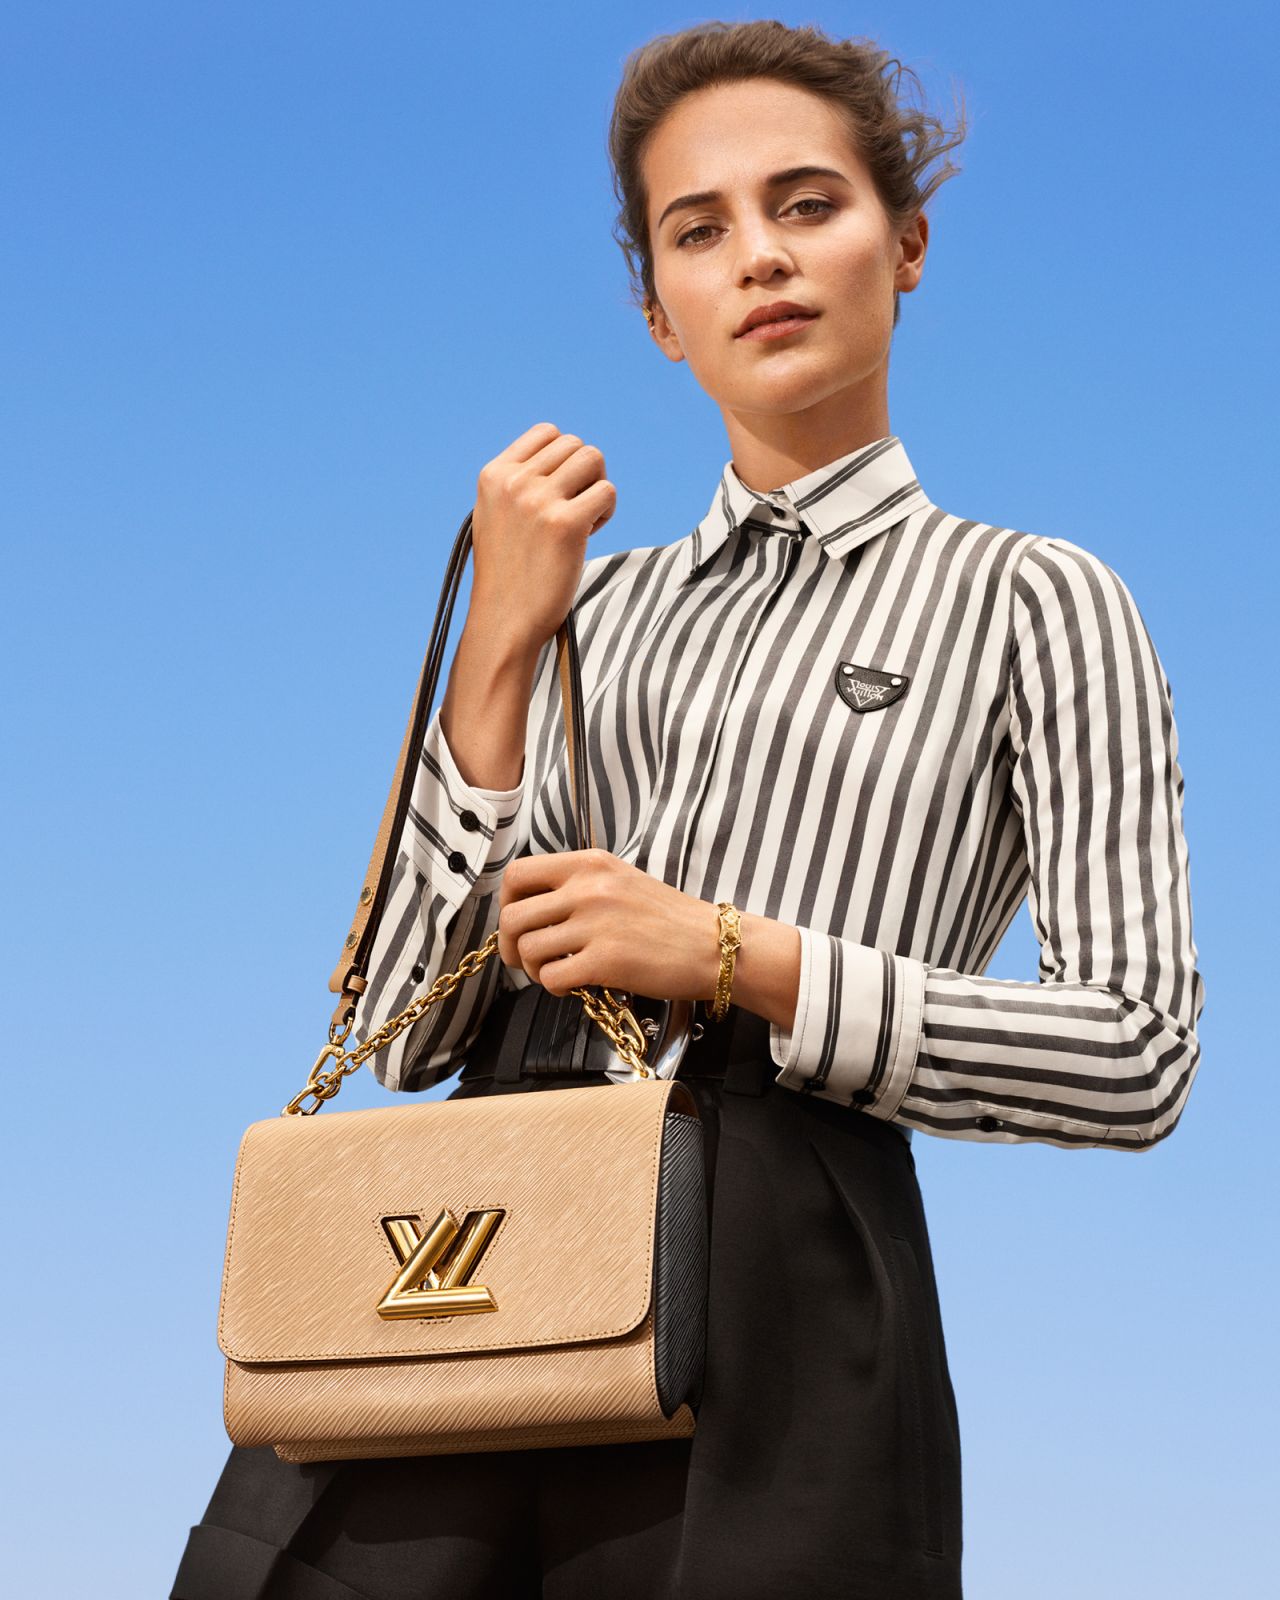 2019 LOUIS VUITTON Handbags : ALICIA VIKANDER Magazine PRINT AD ( 2-pg )